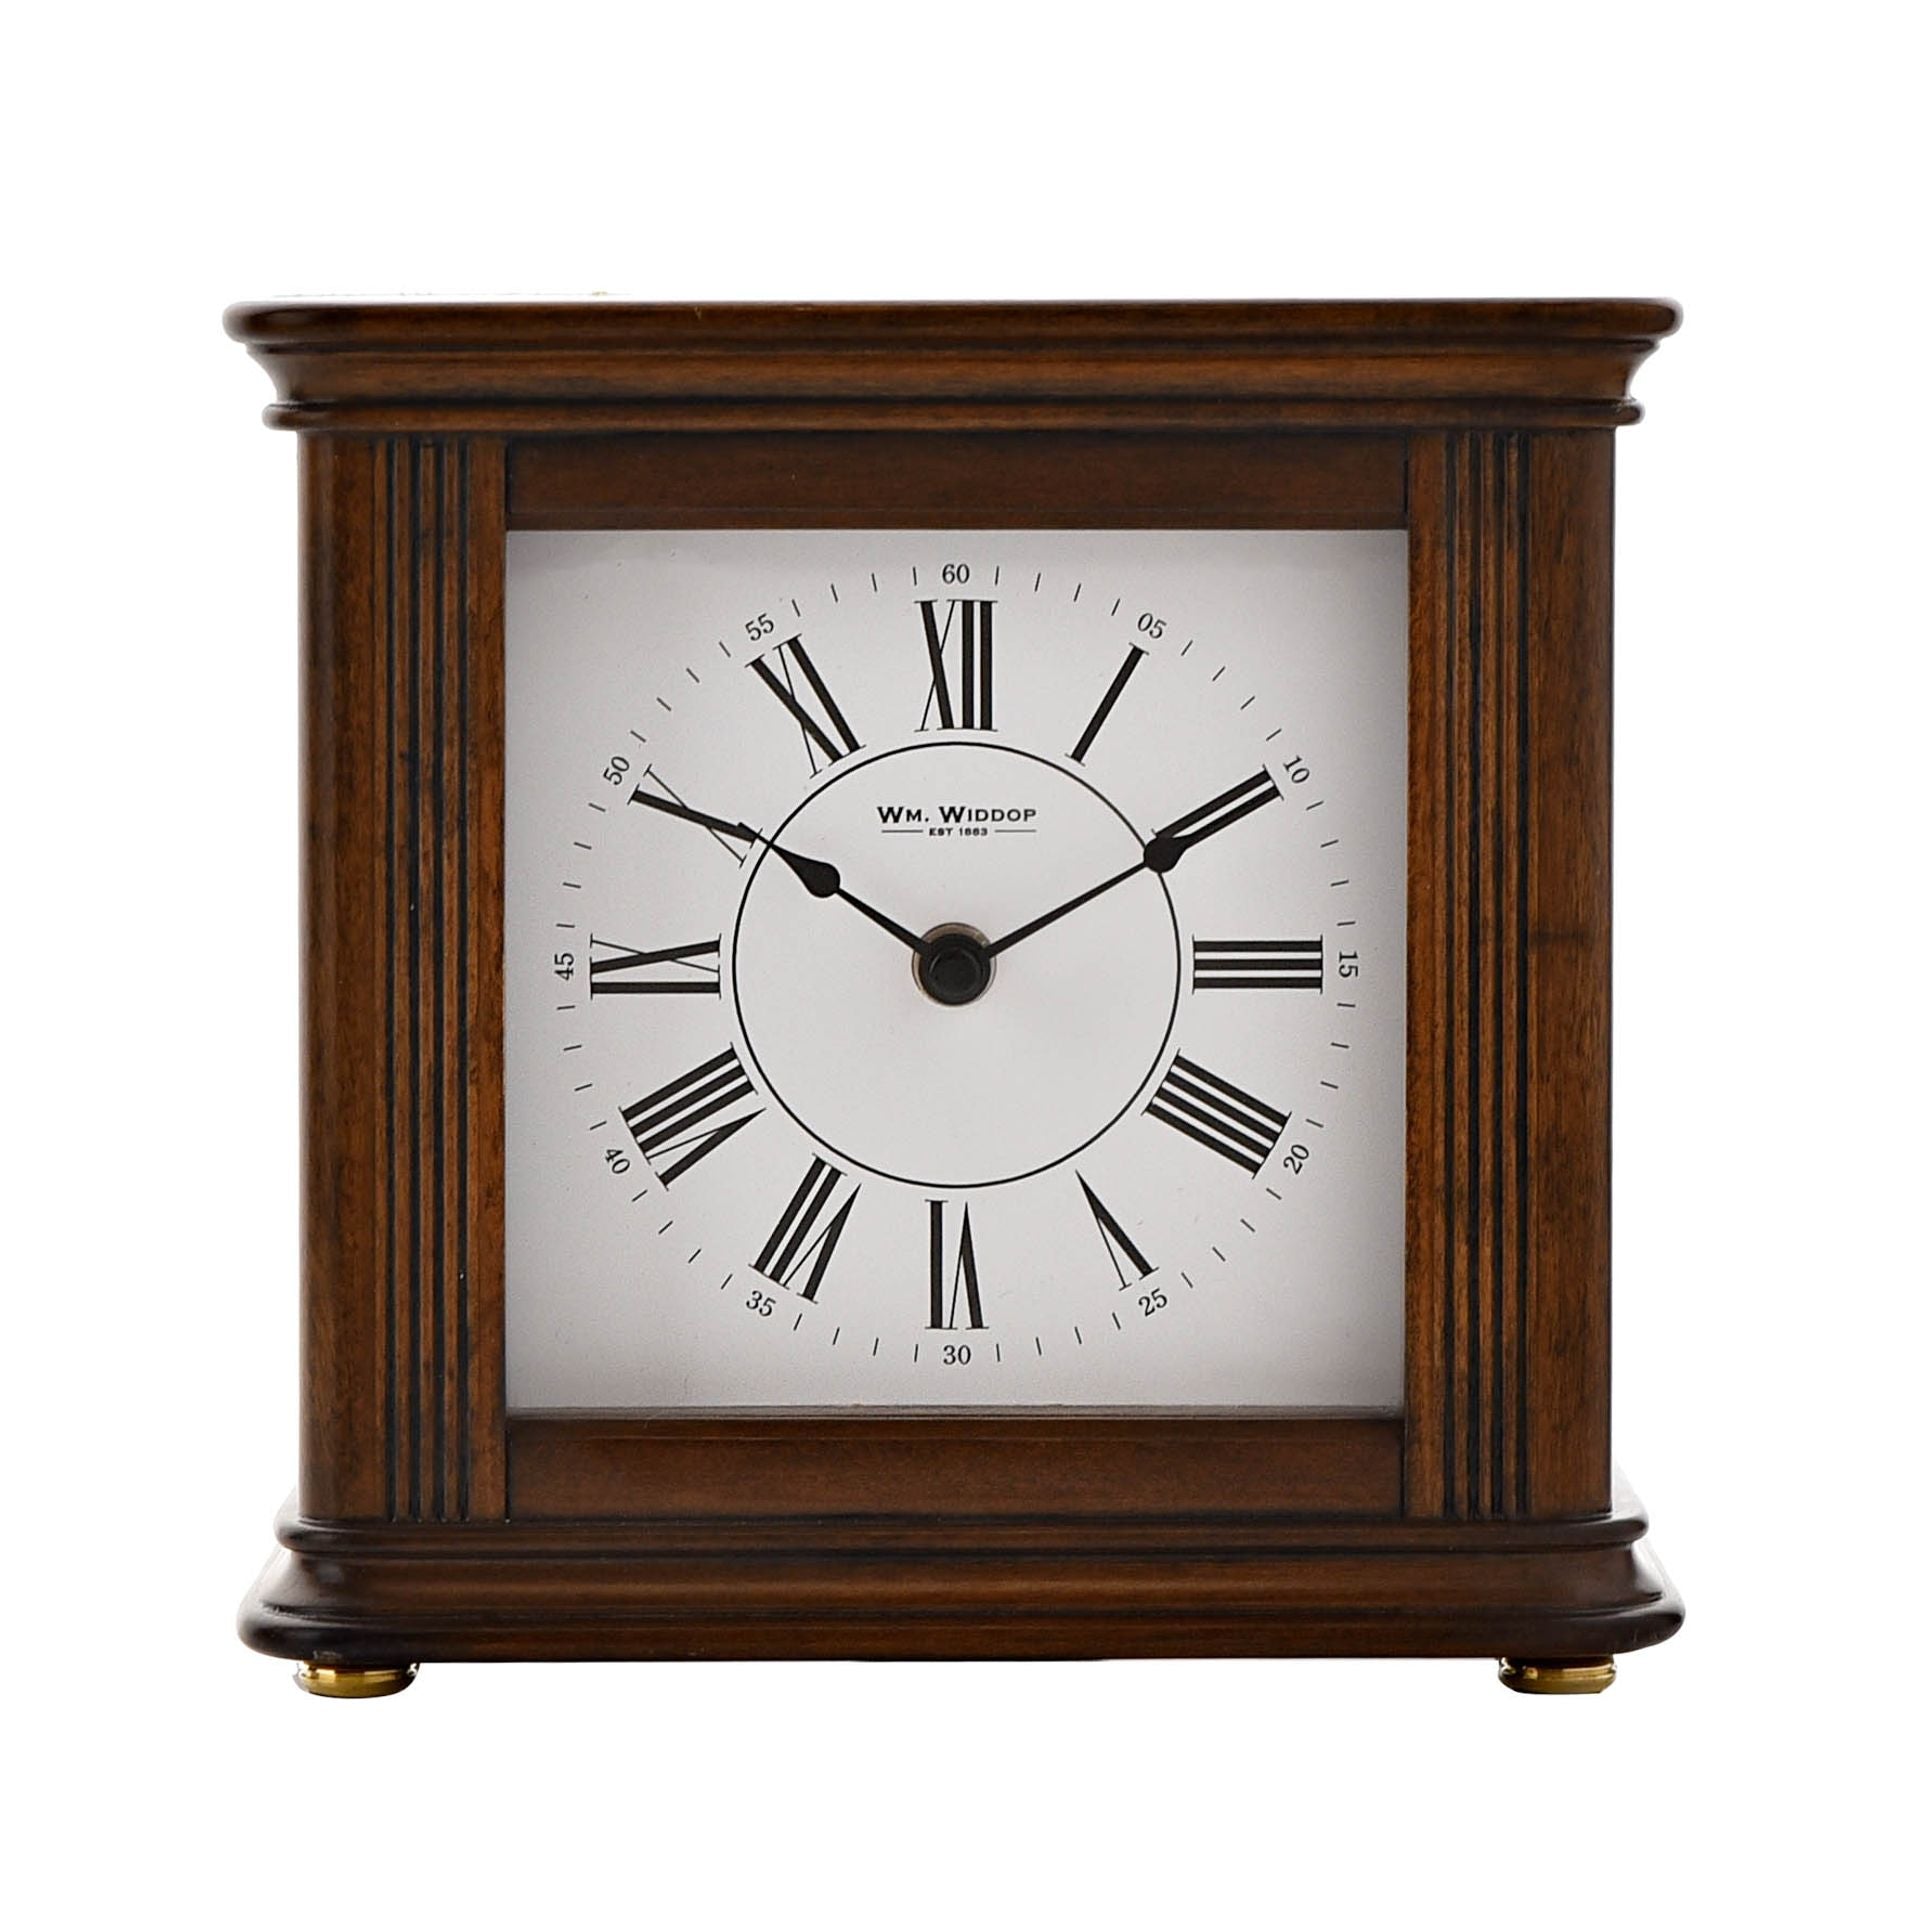 WM. Widdop Walnut Finish Mantel Clock - Westminster Chime